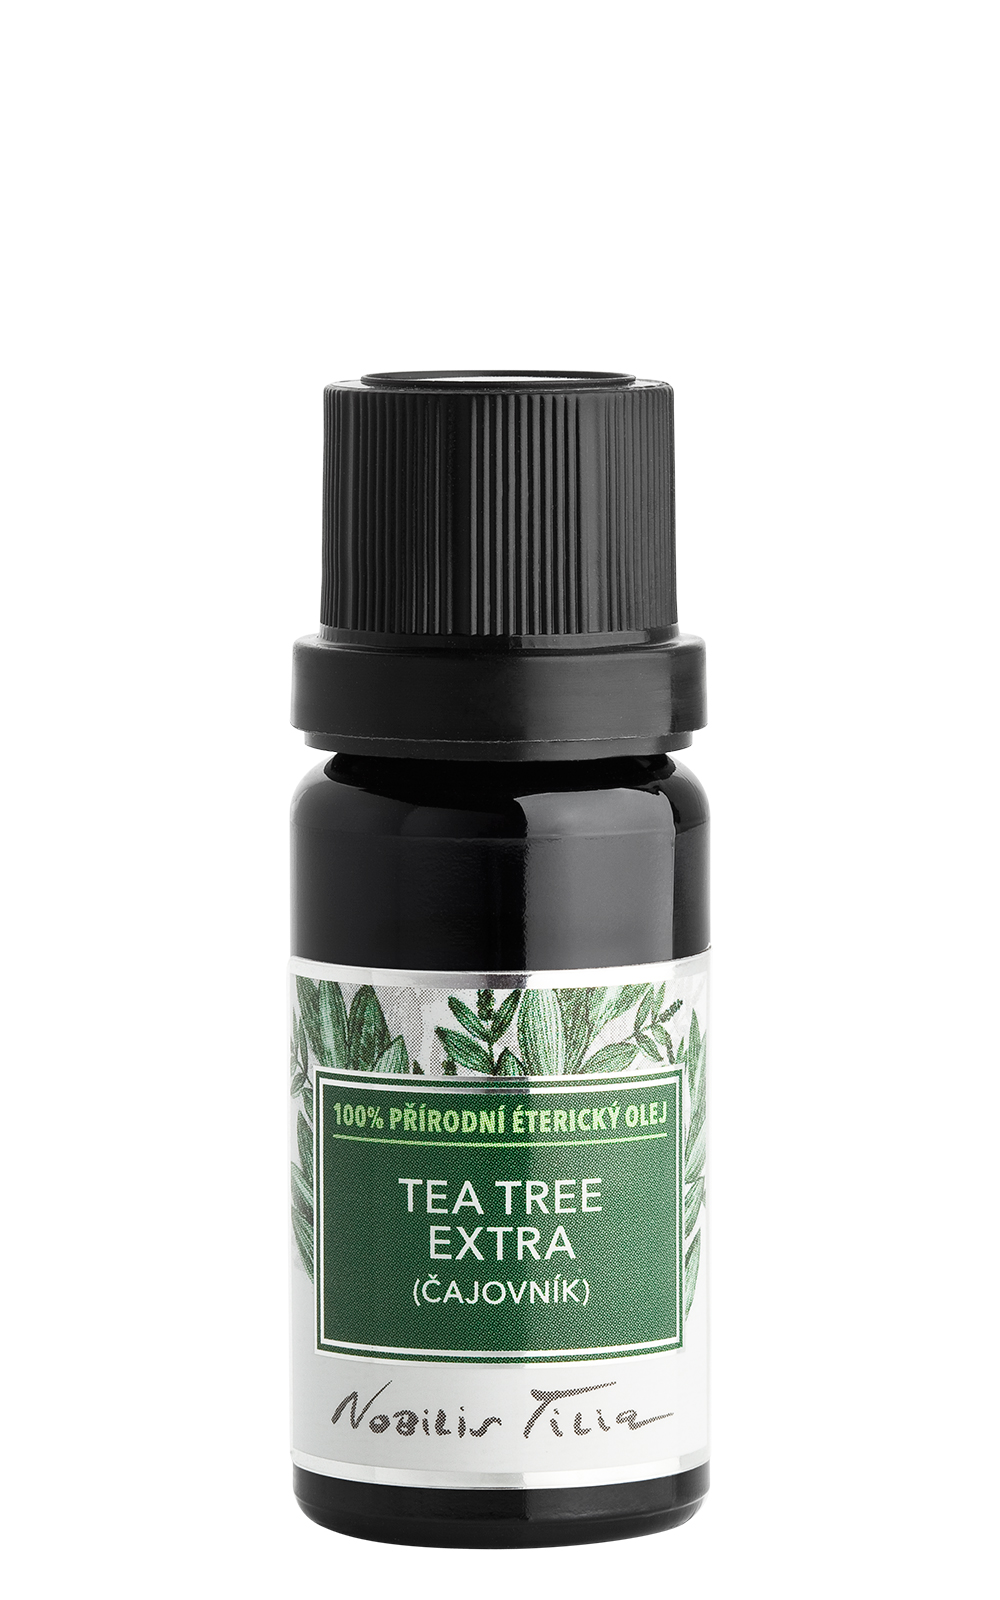 Nobillis Tilia Éterický olej Tea Tree extra (čajovník) 10ml